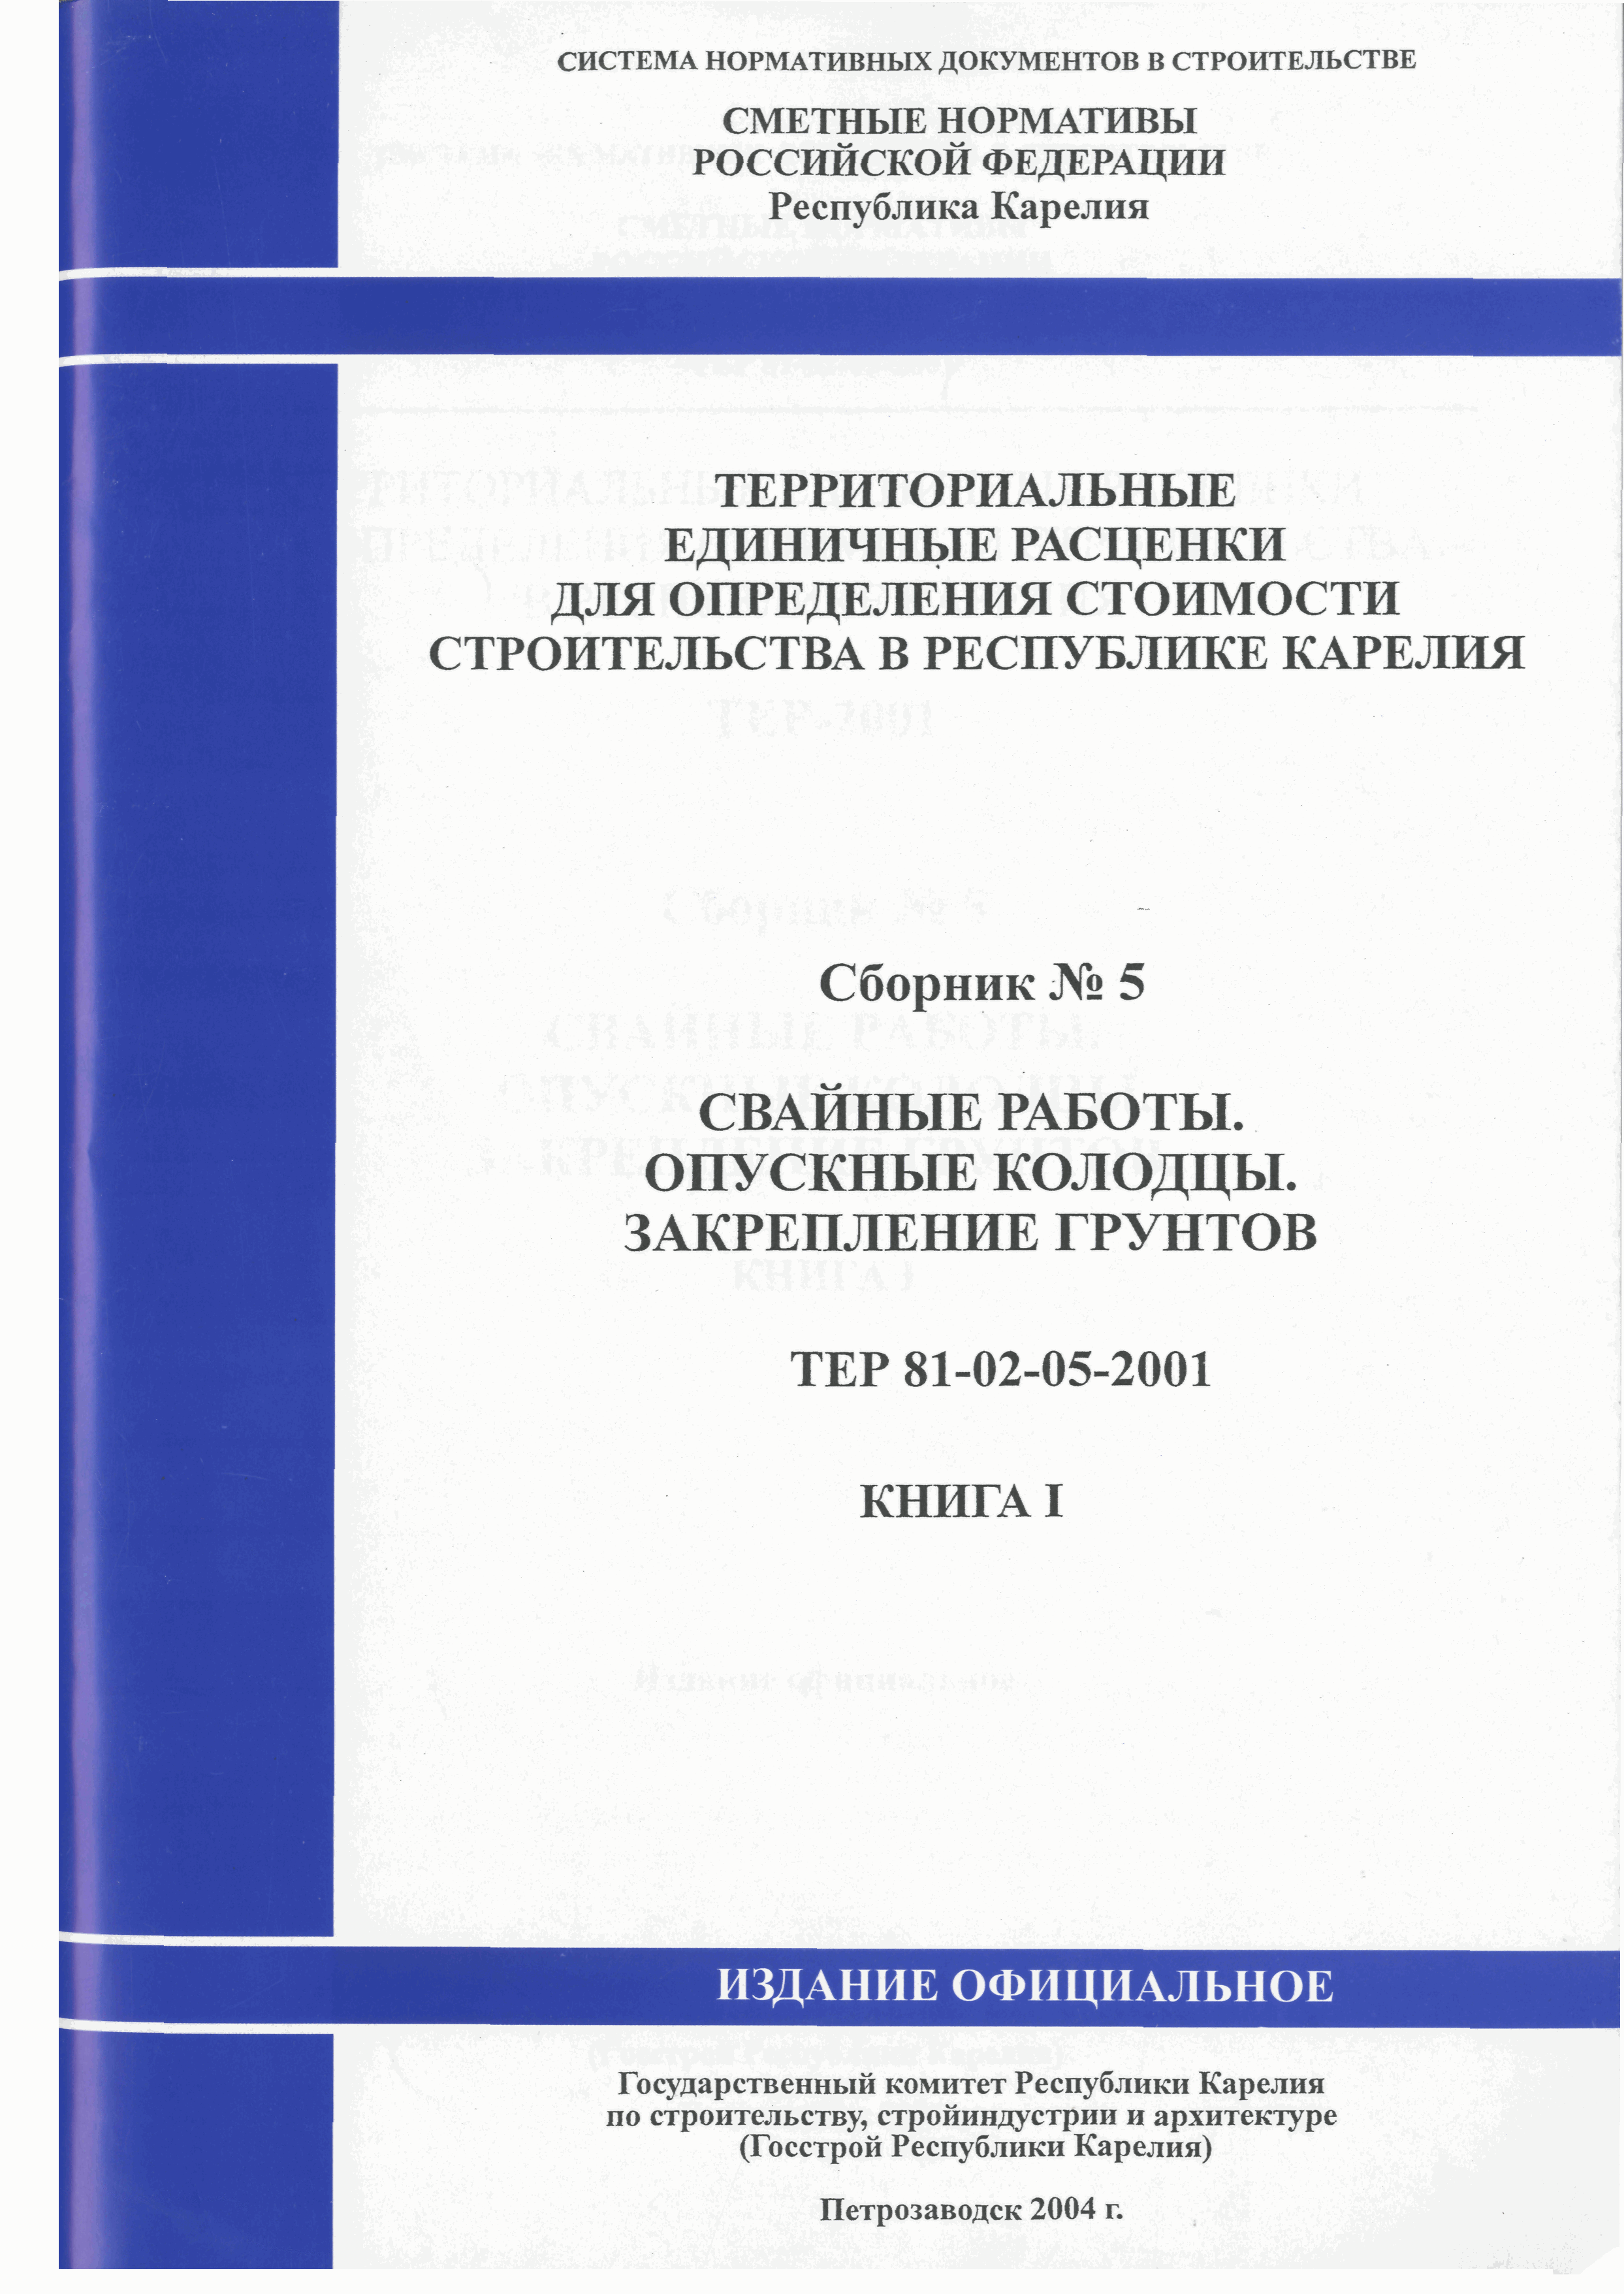 ТЕР Республика Карелия 2001-05